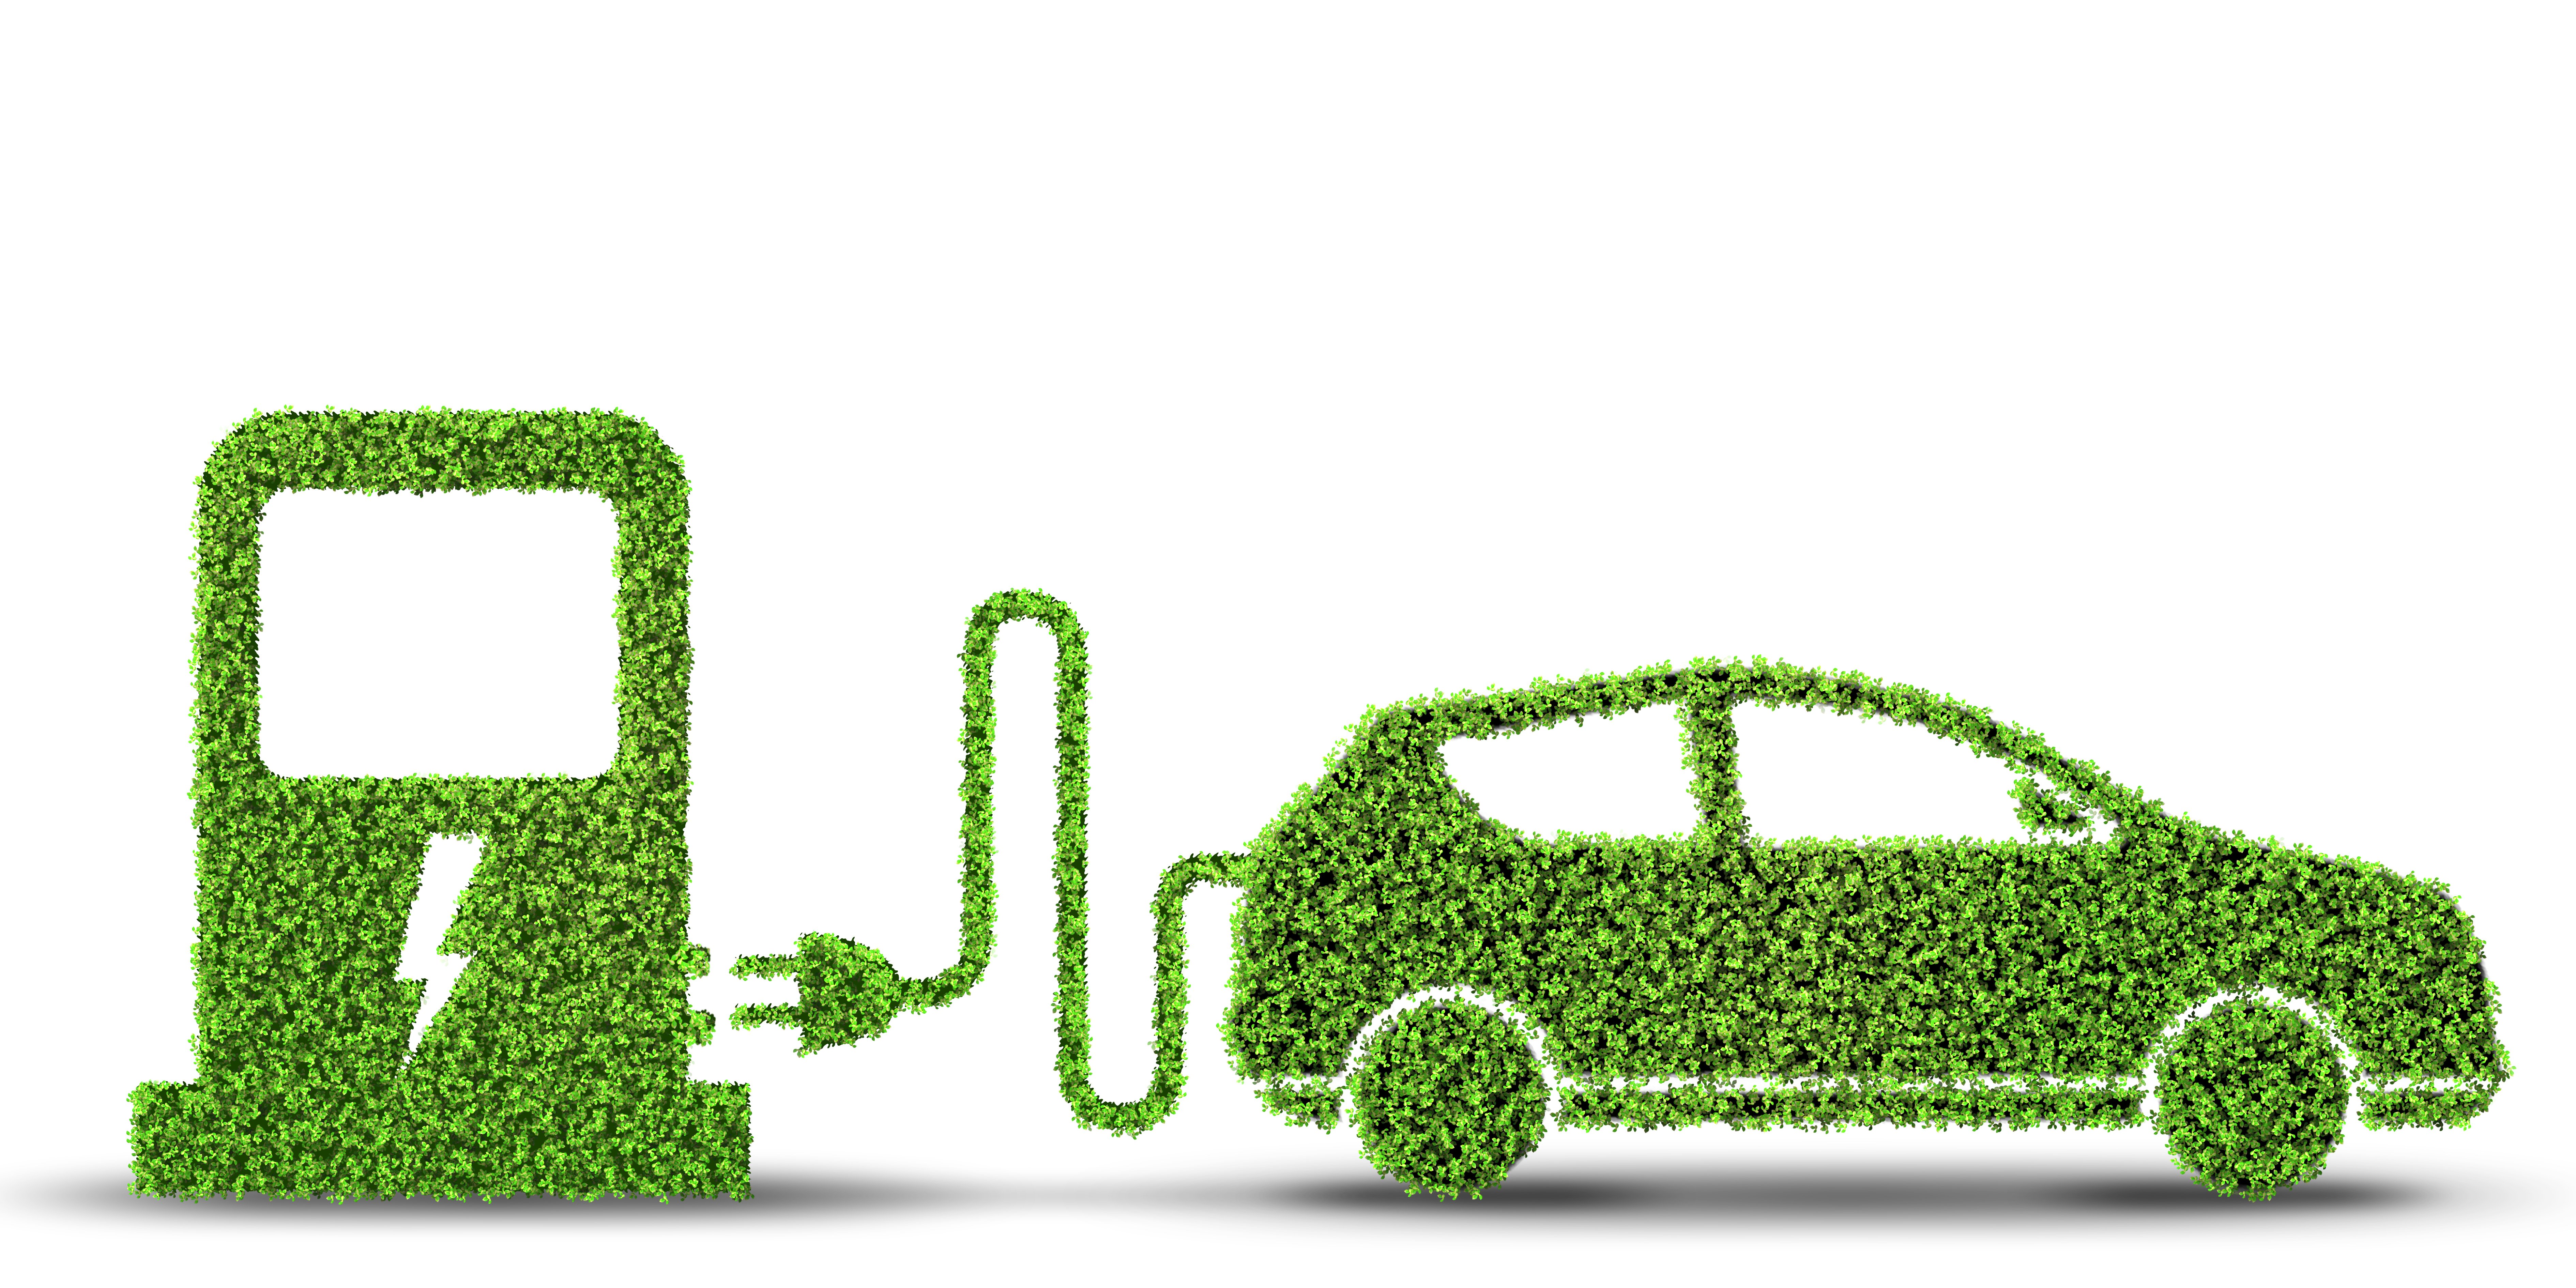 HopSkipDrive exceeds electric vehicle goals